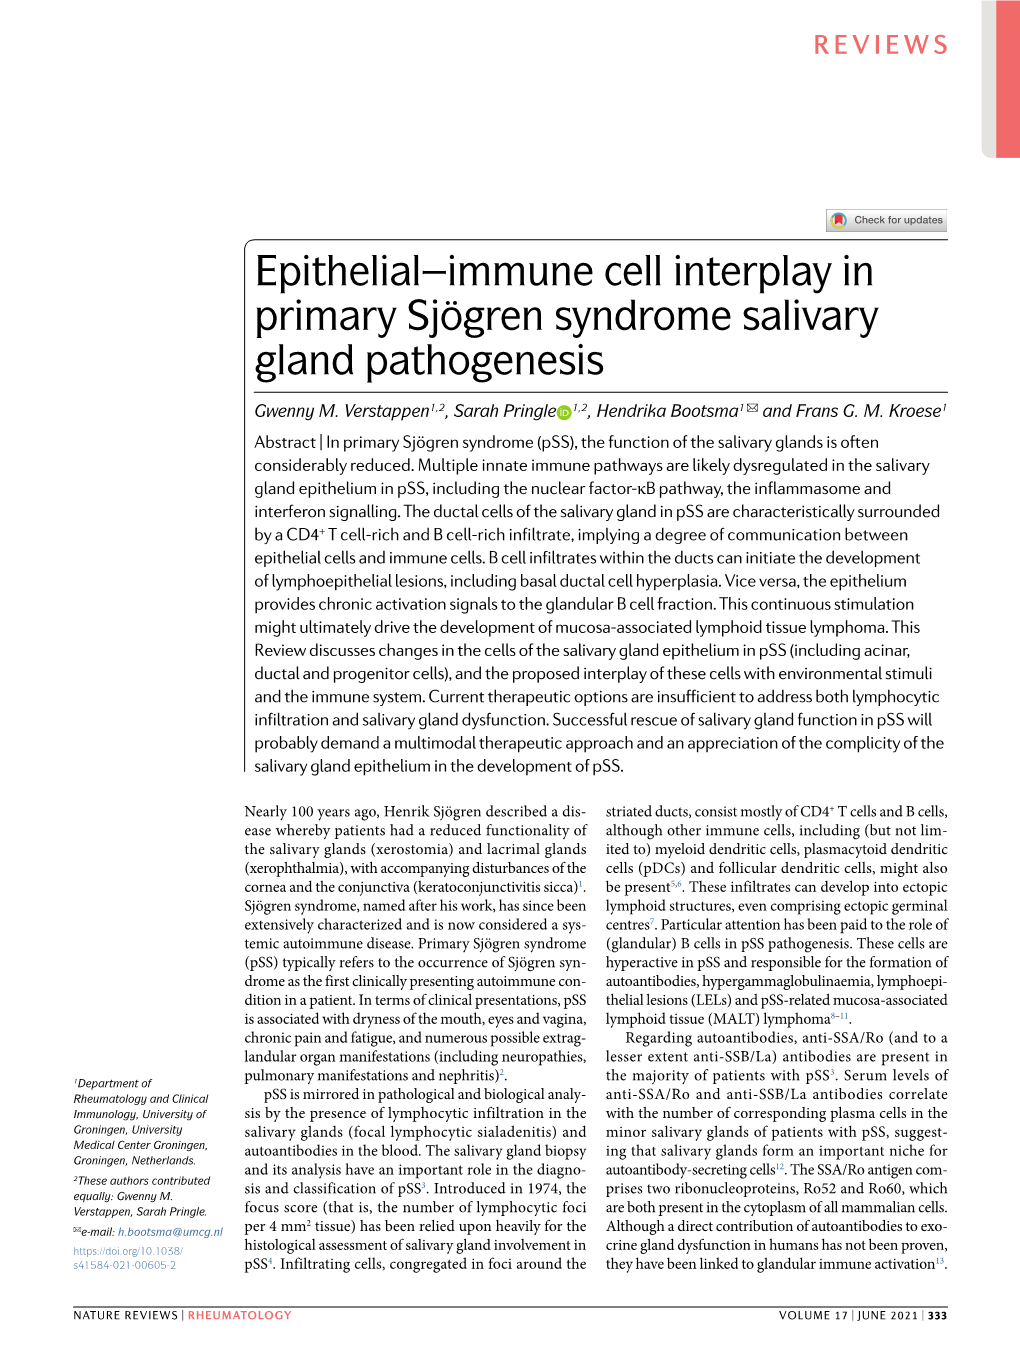 Epithelial–Immune Cell Interplay in Primary Sjögren Syndrome Salivary Gland Pathogenesis